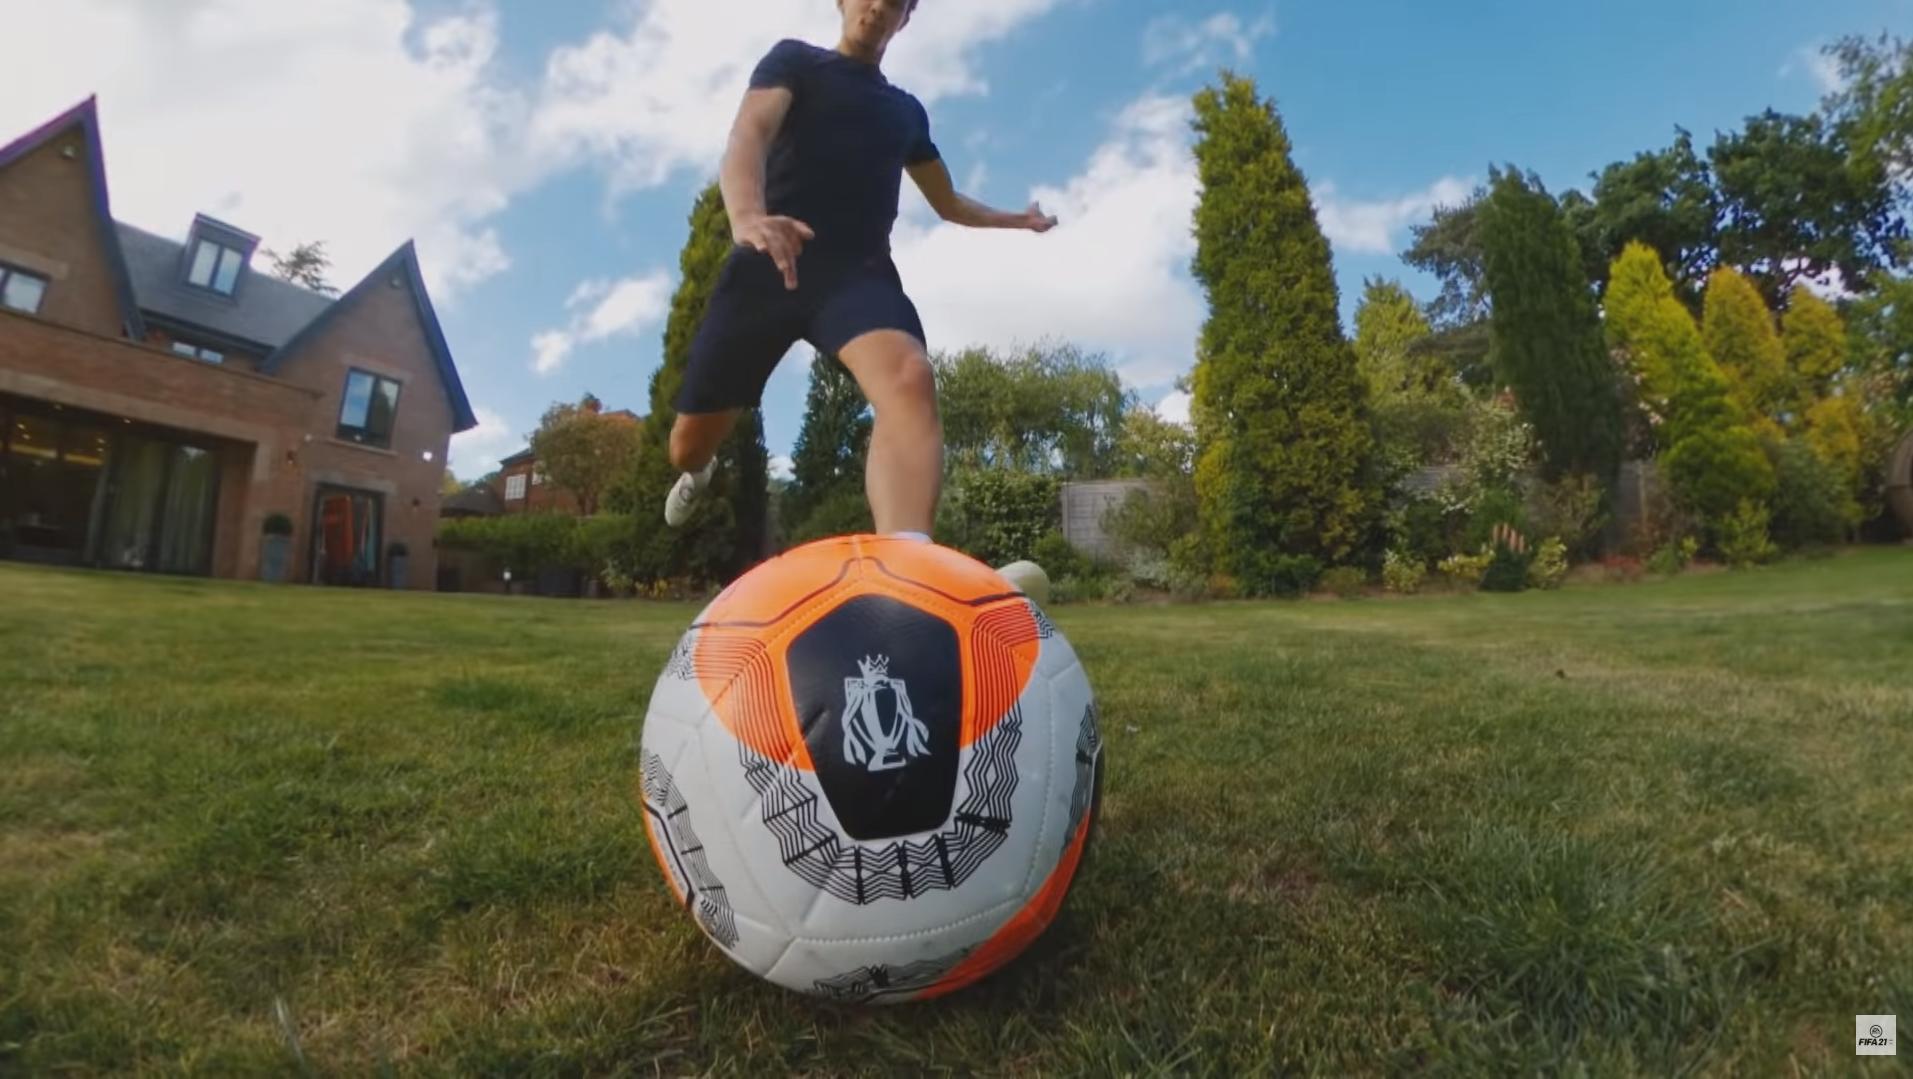 Trent Alexander-Arnold kicks a ball in the FIFA 21 reveal trailer.